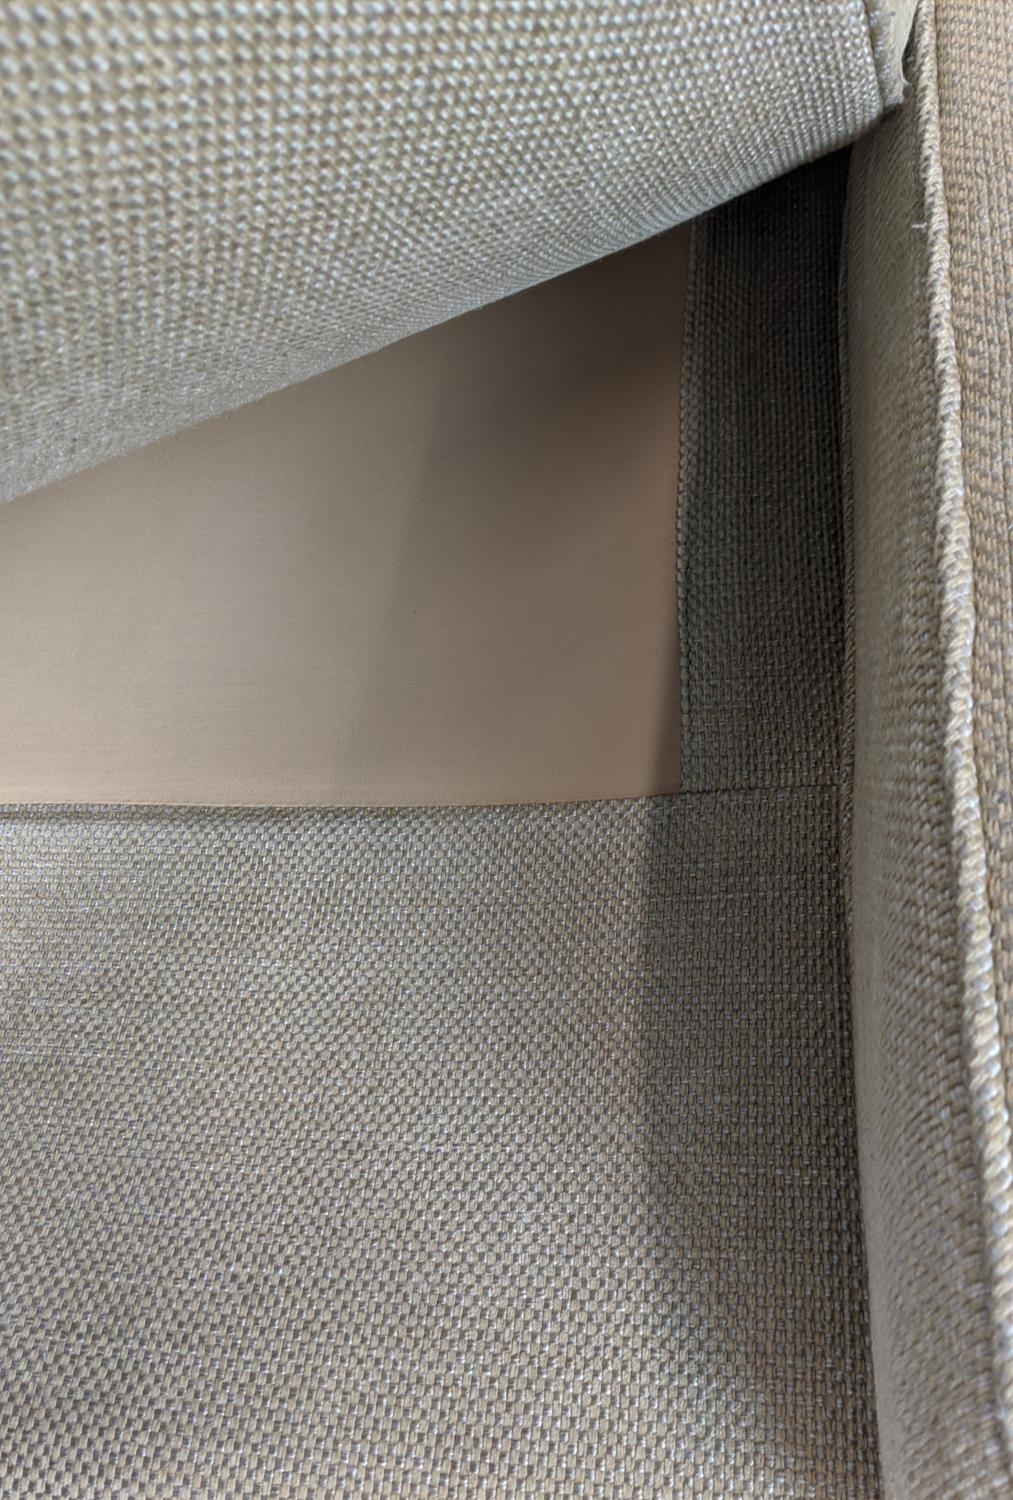 KINGCOME SHERWOOD SOFA, light brown upholstery, 181cm W x 75cm H x 95cm D. - Image 6 of 7